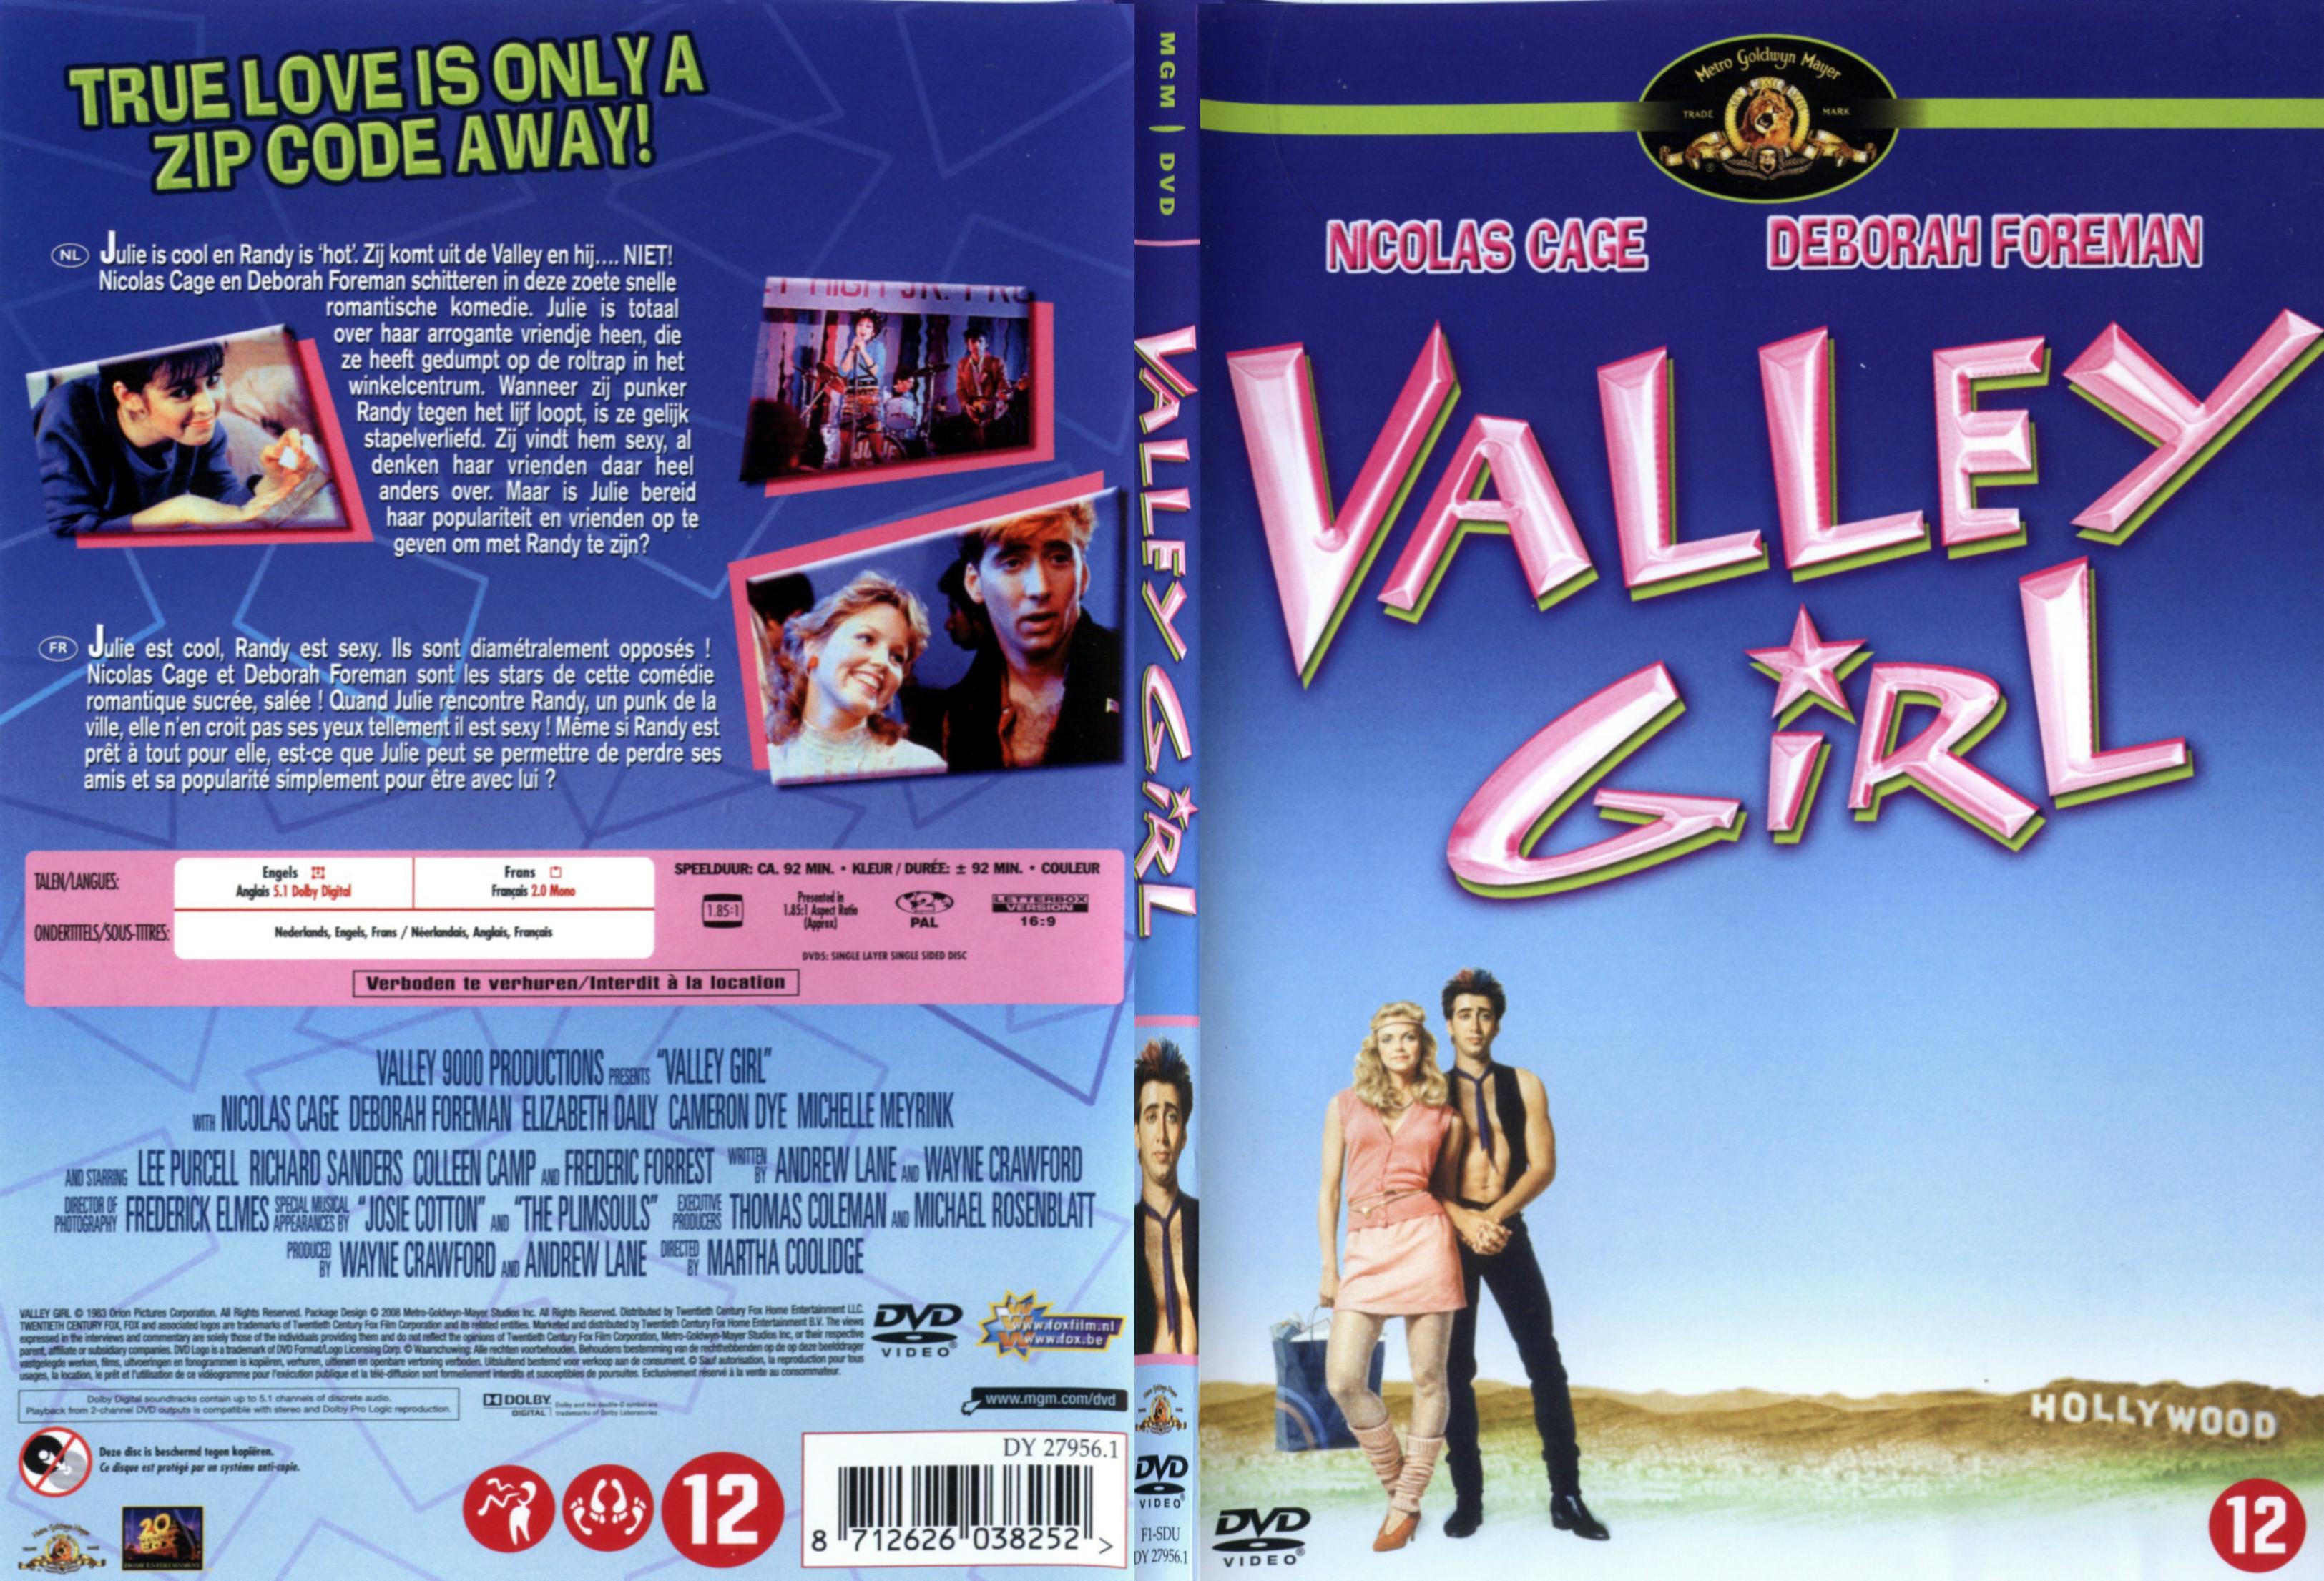 Jaquette DVD Valley girl - SLIM